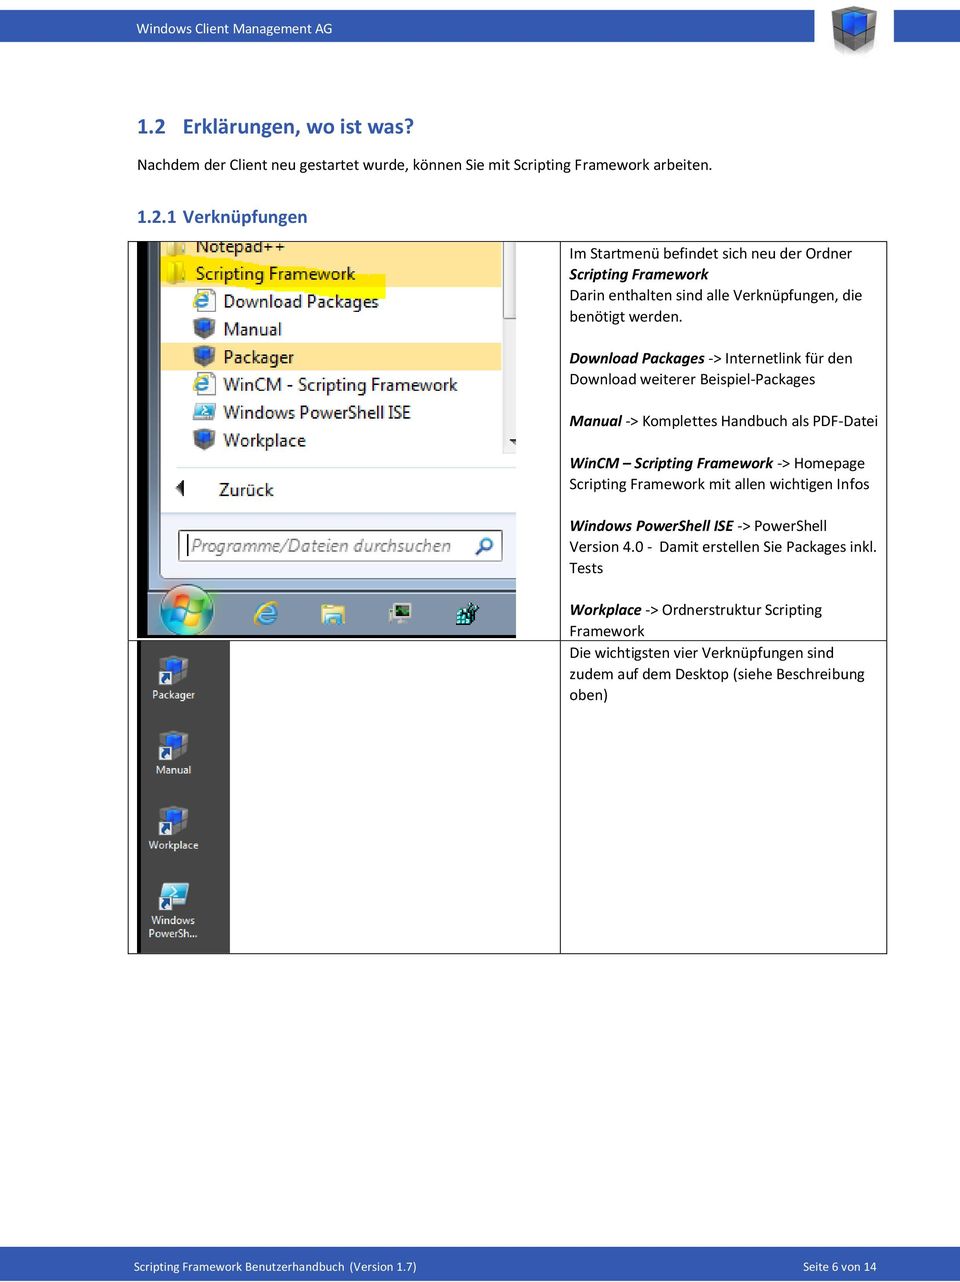 wichtigen Infos Windows PowerShell ISE -> PowerShell Version 4.0 - Damit erstellen Sie Packages inkl.